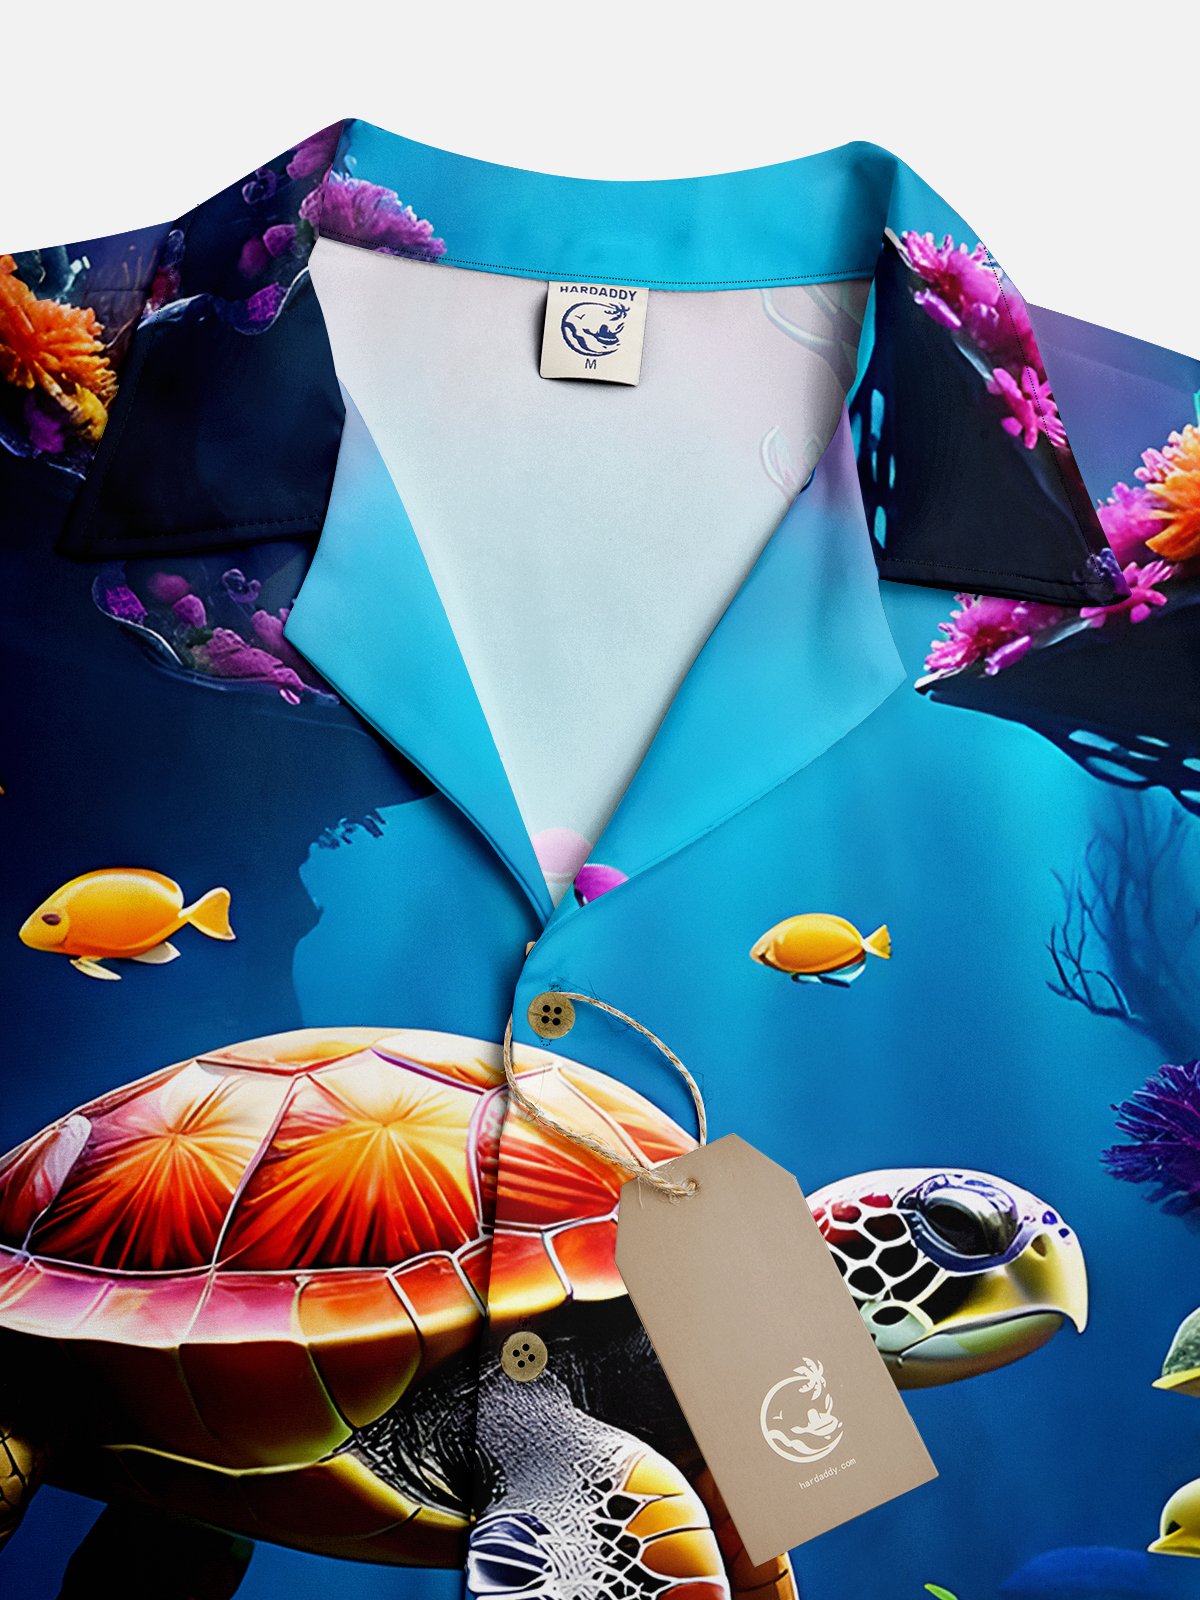 Moisture-wicking Ocean Turtle Hawaiian Shirt